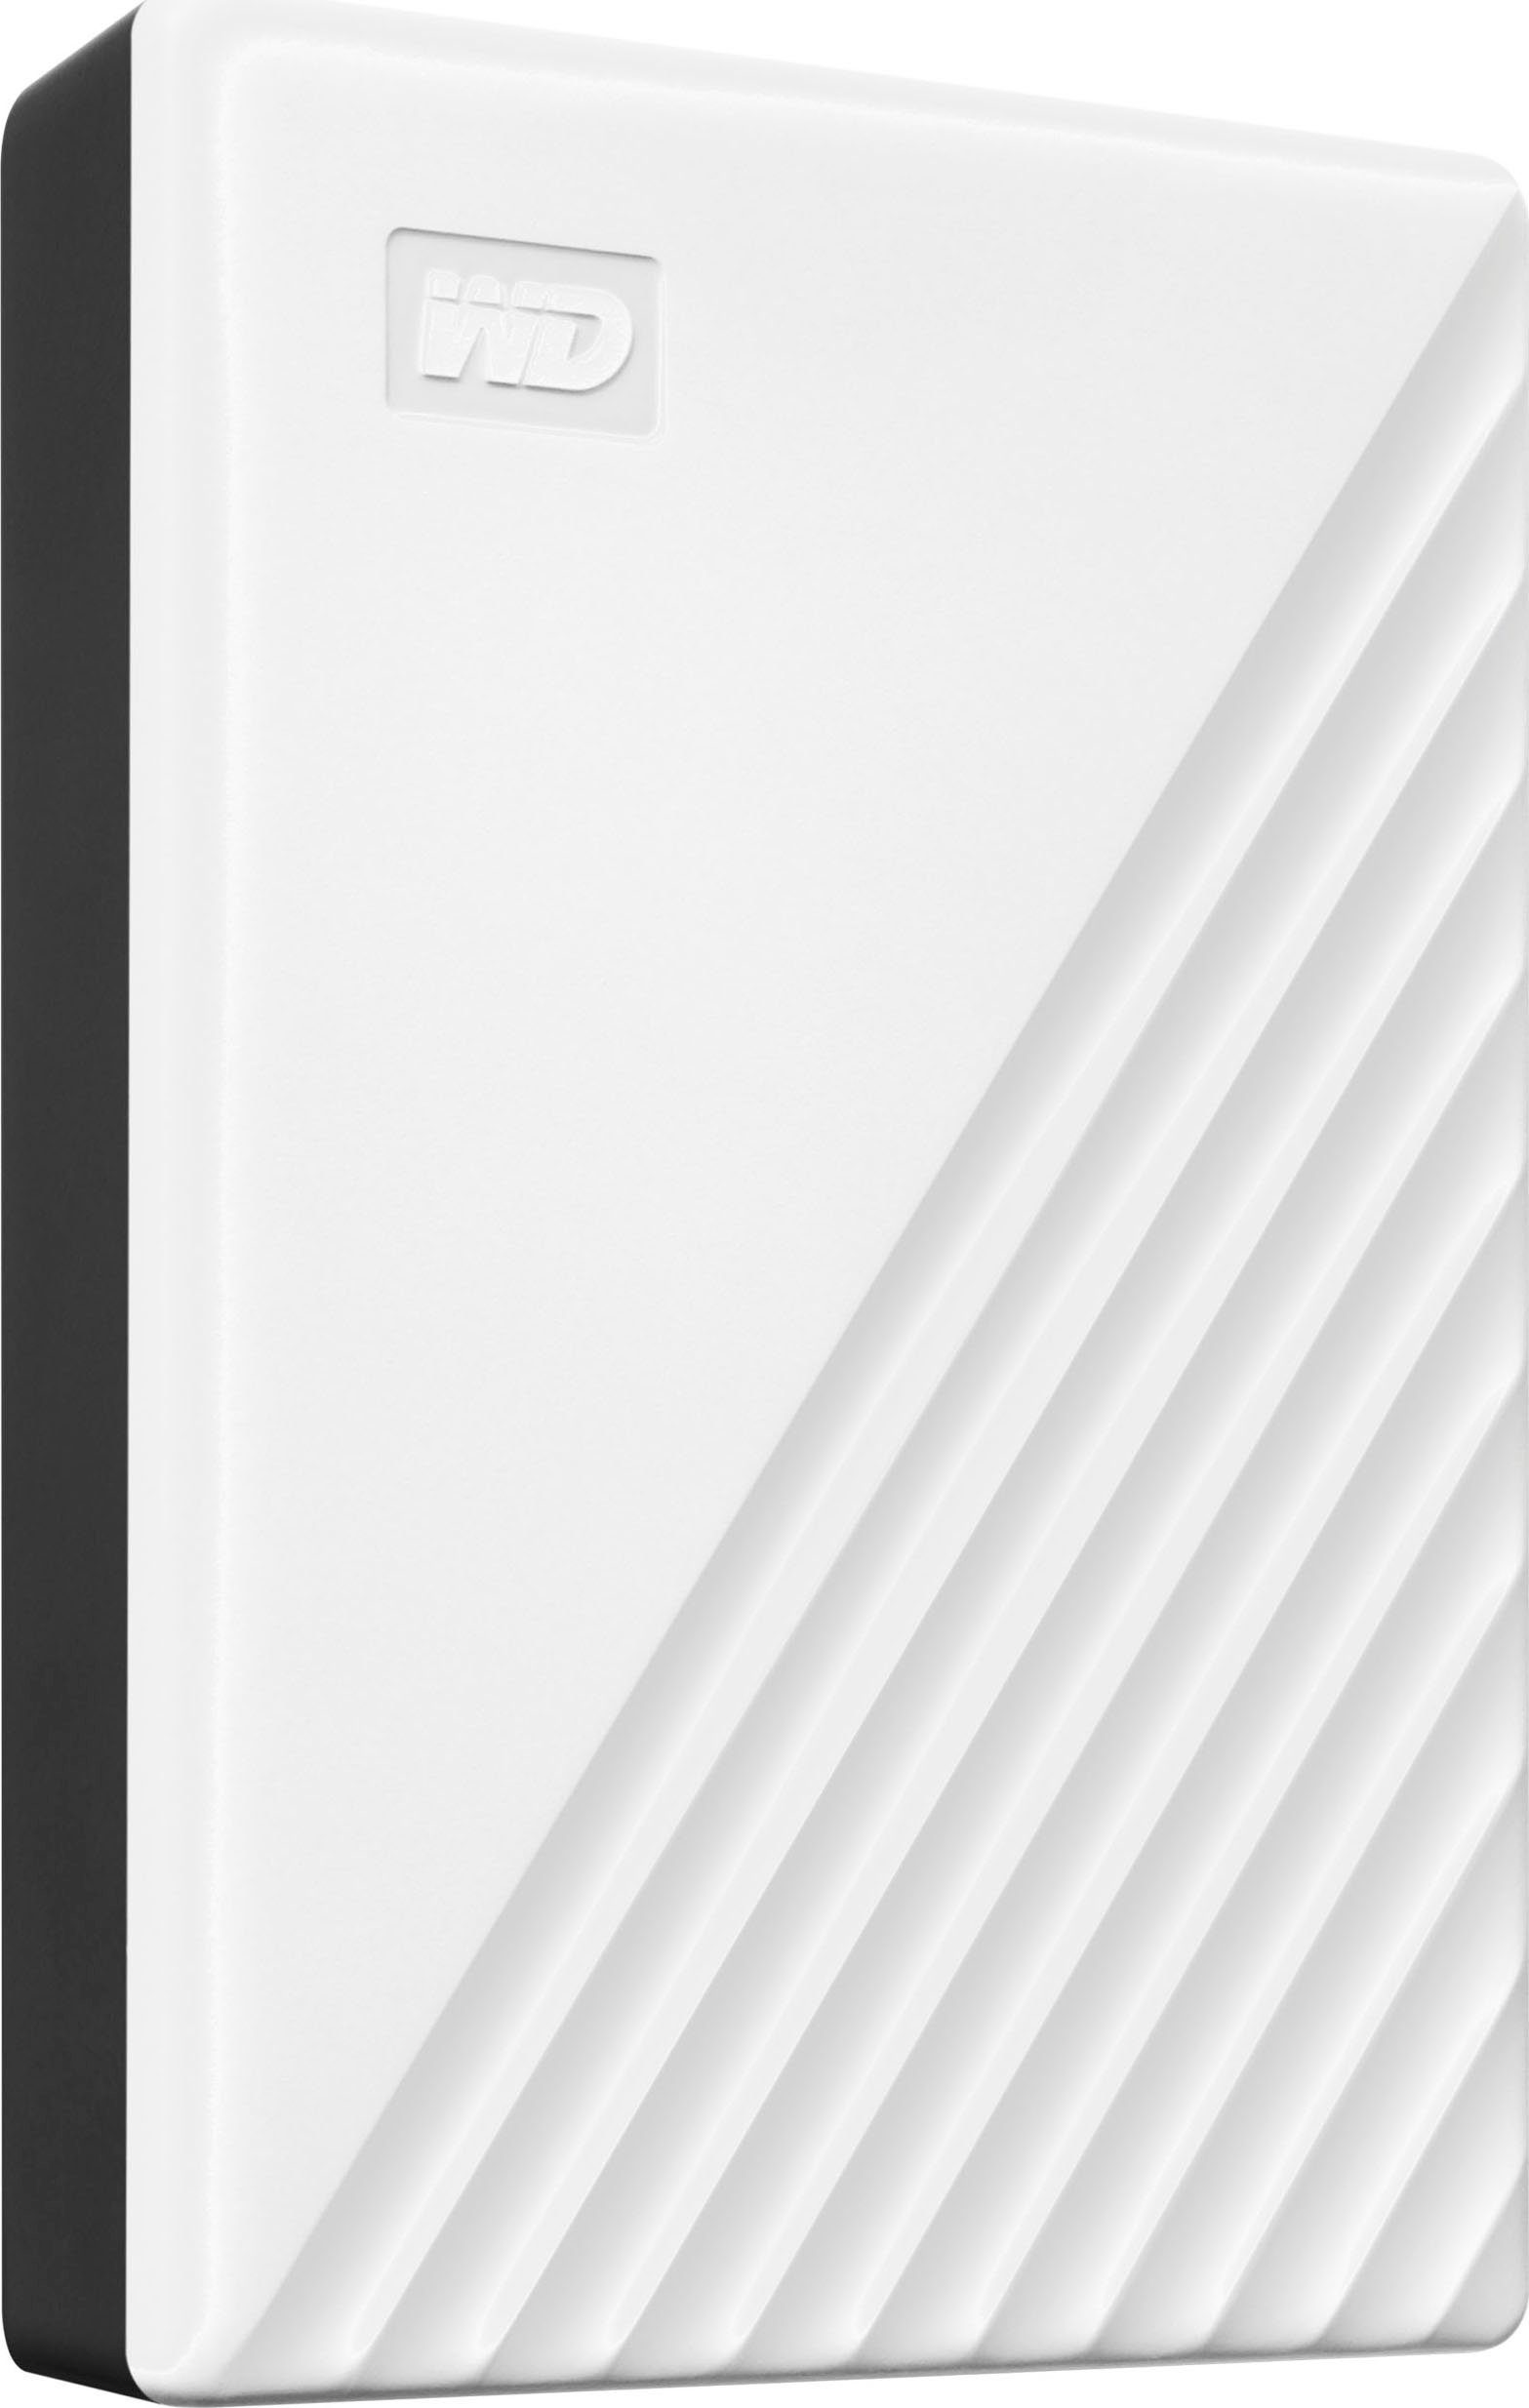 externe My (5 TB) HDD-Festplatte WD Passport™ White Edition 2,5"